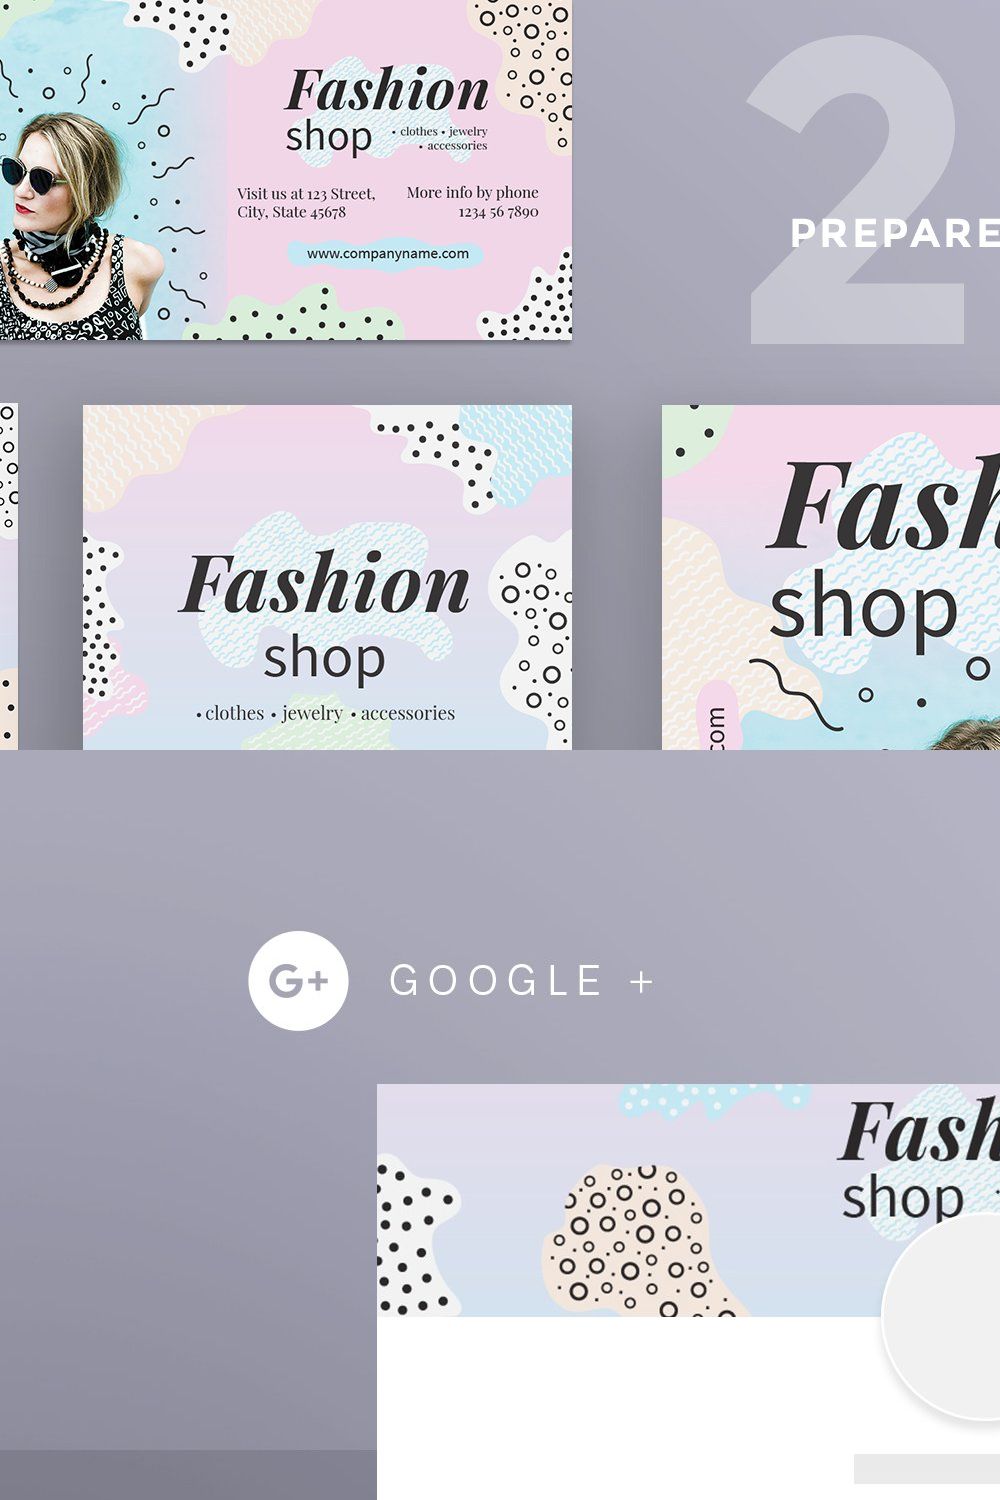 Social Media Pack | Fashion Shop pinterest preview image.